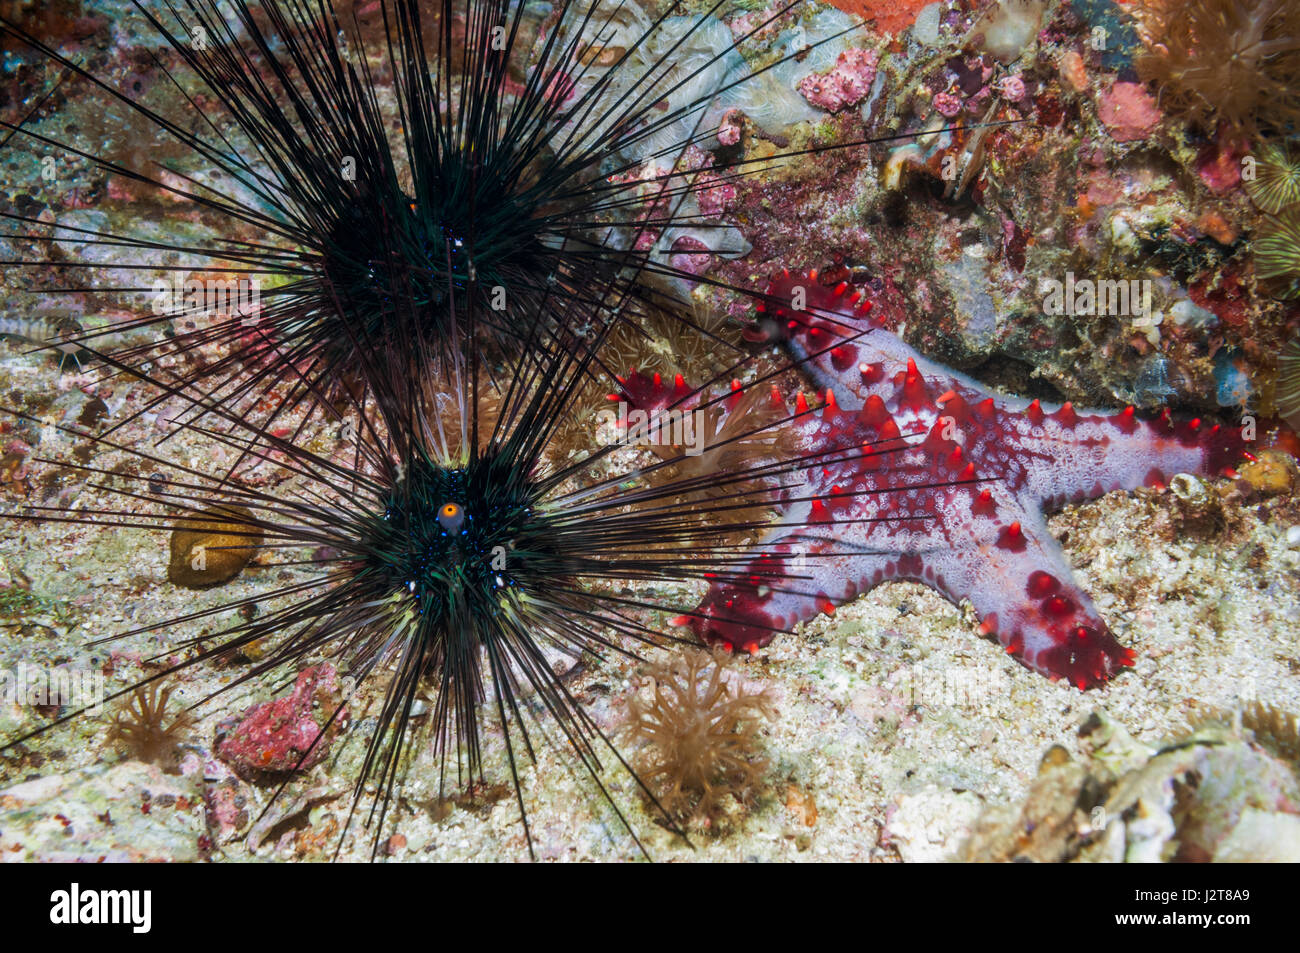 Honeycomb or Cushion starfish [Pentaceraster alveolatus] and Diadem urchins [Echinothrix diadema].  Malapascua Island, Philippines. Stock Photo